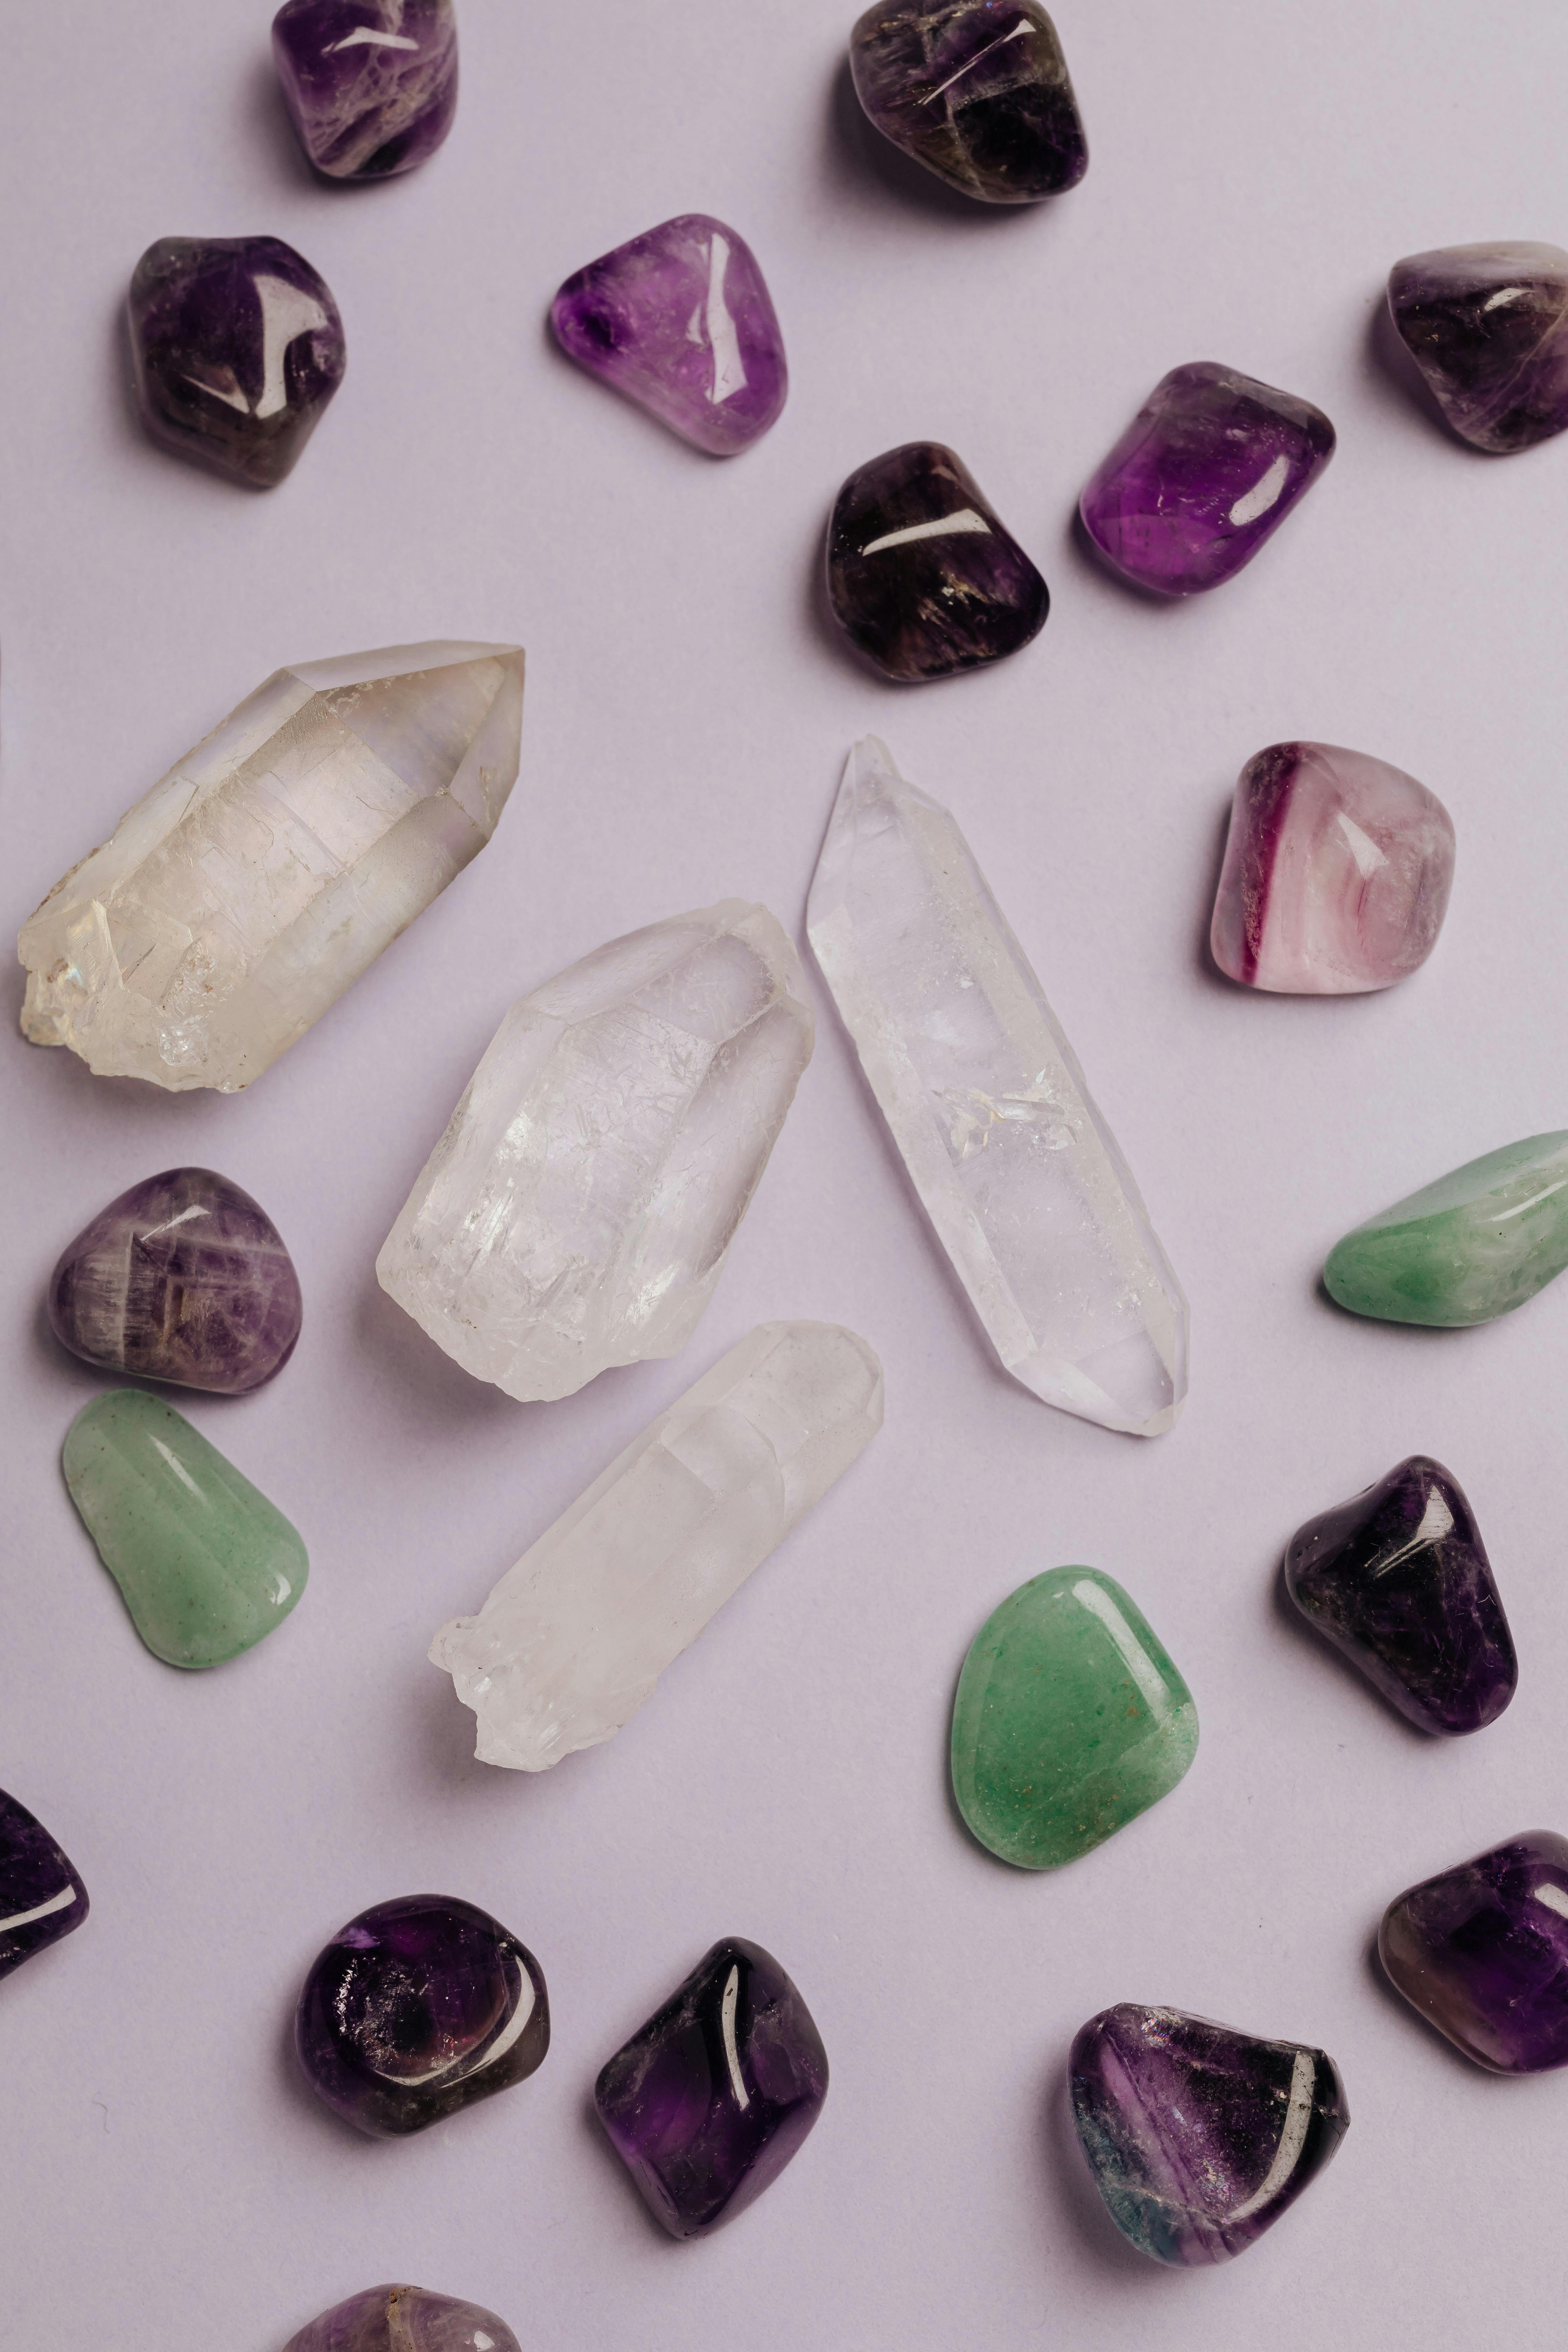 Assorted crystals | Source: Pexels